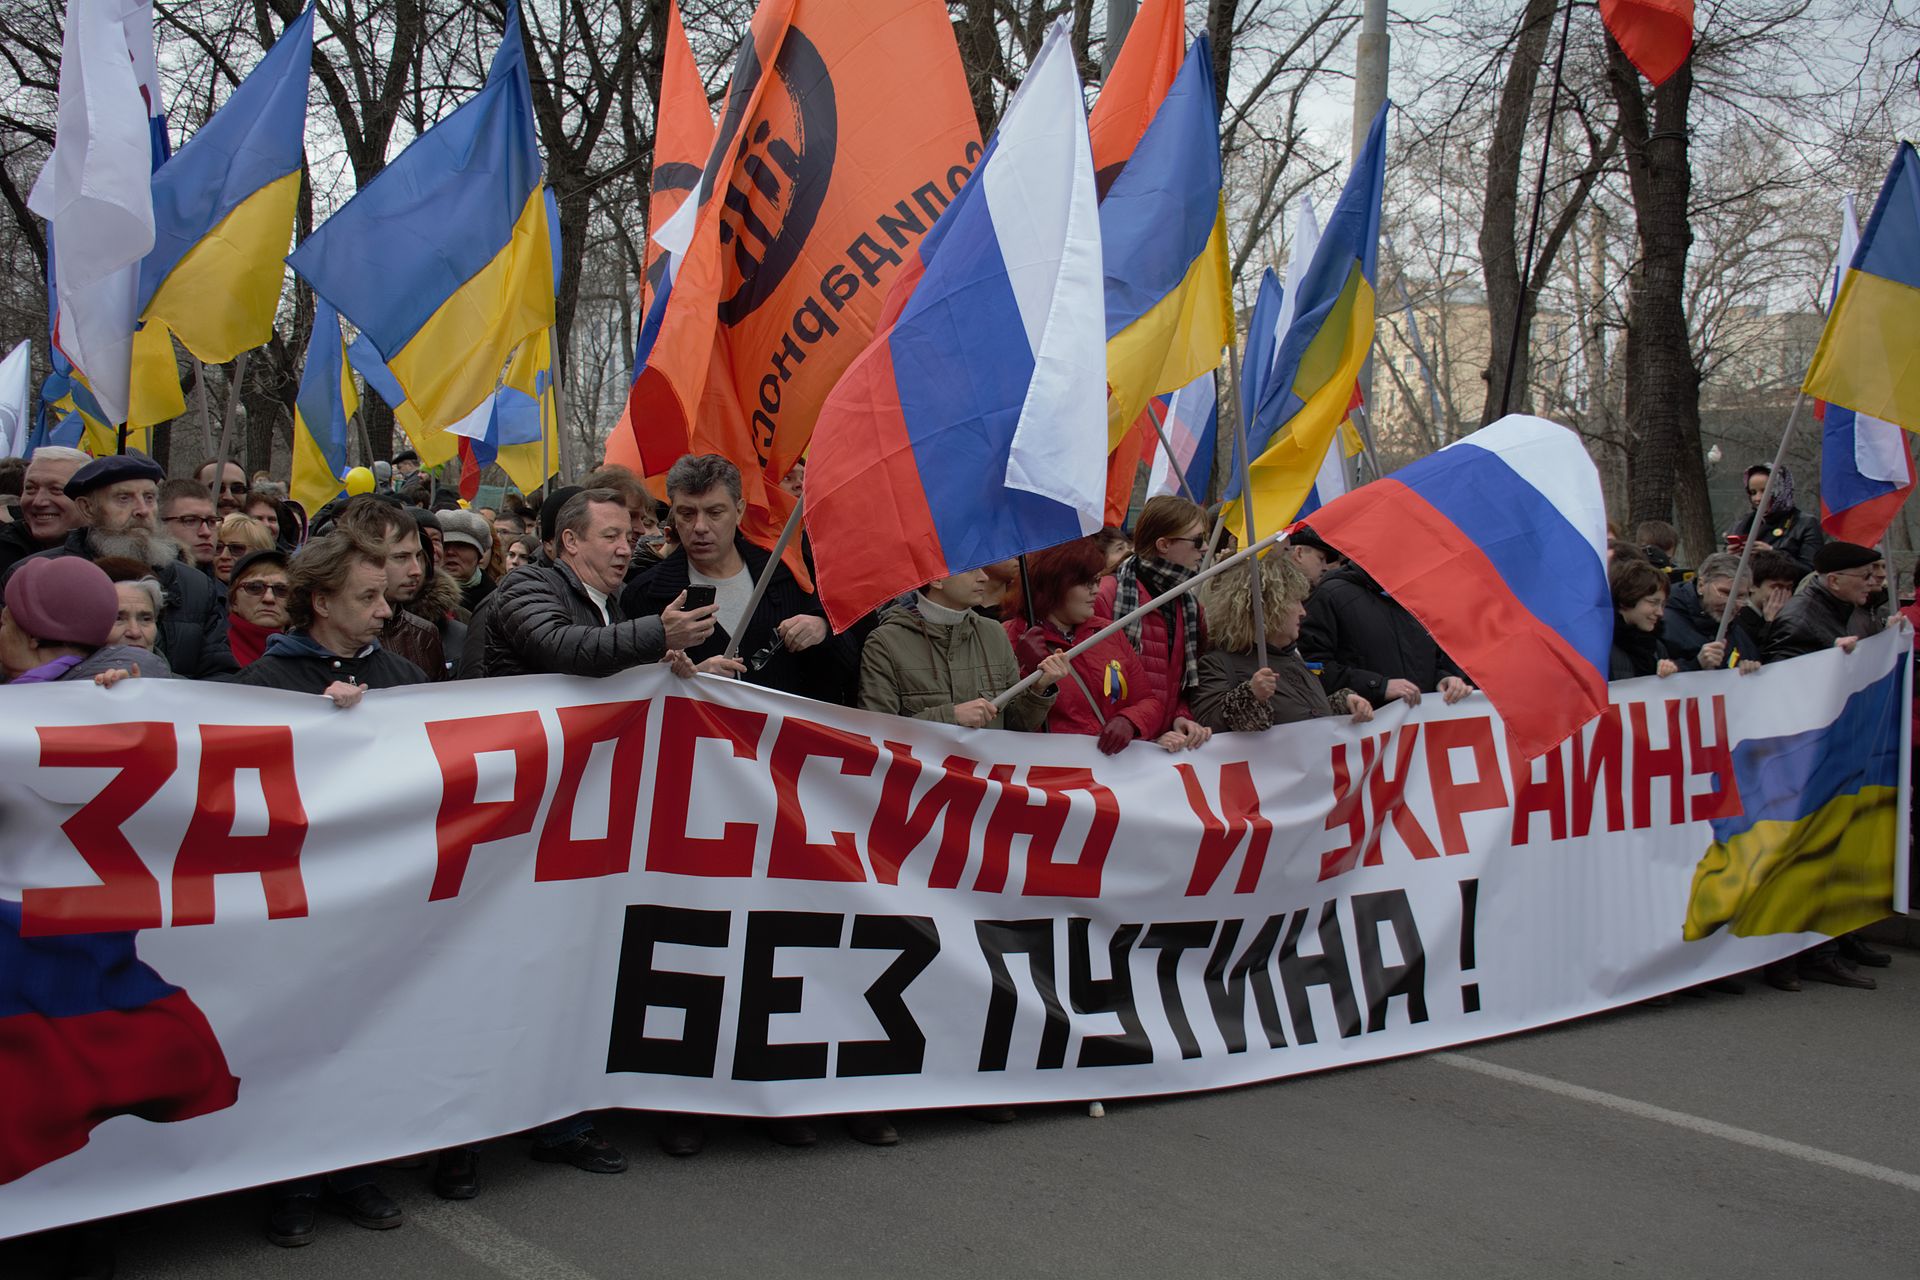 Boris Nemtsov Russia Ukraine without Putin 15 March 2014 height=410